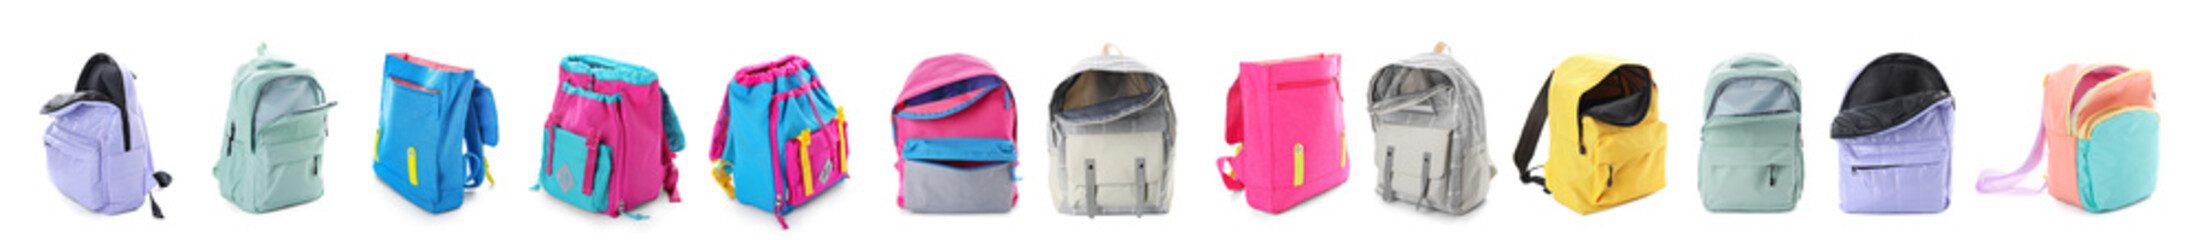 Set of many school backpacks on white background